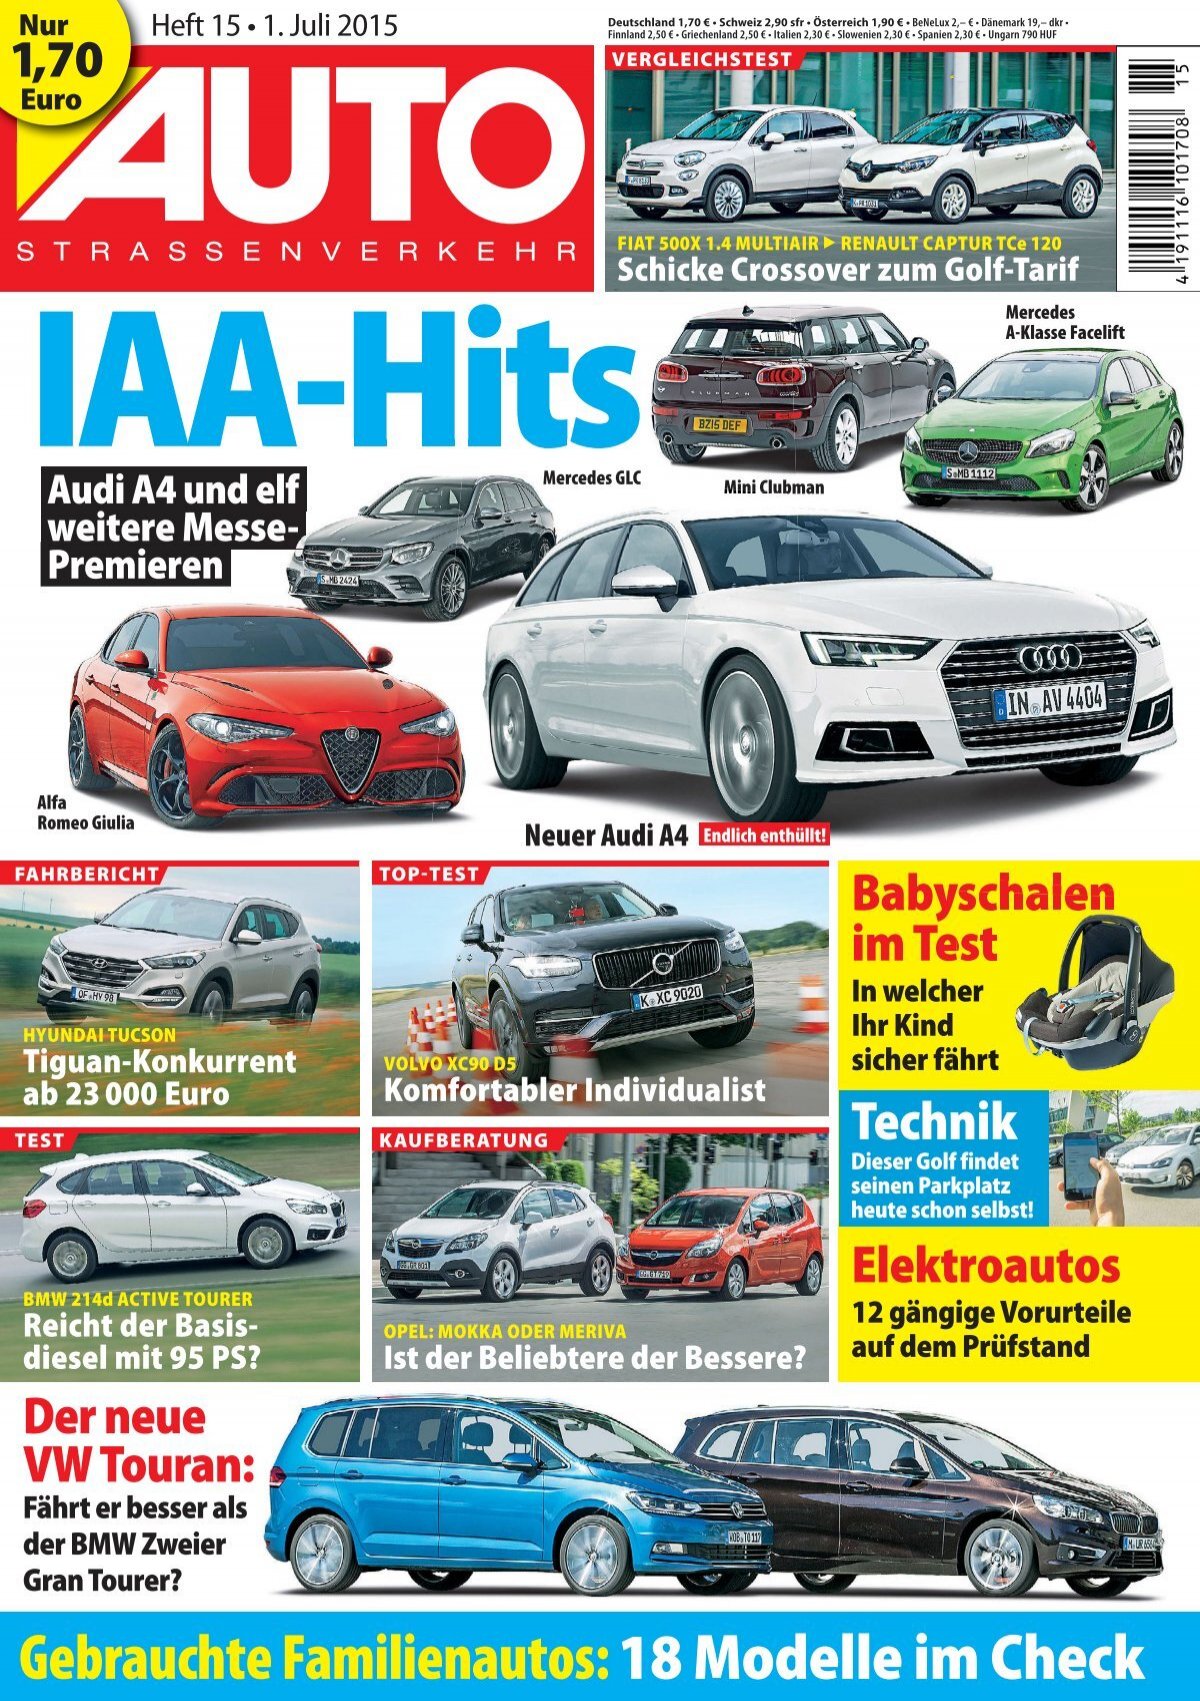 AUTOStraßenverkehr Heft 15-2015